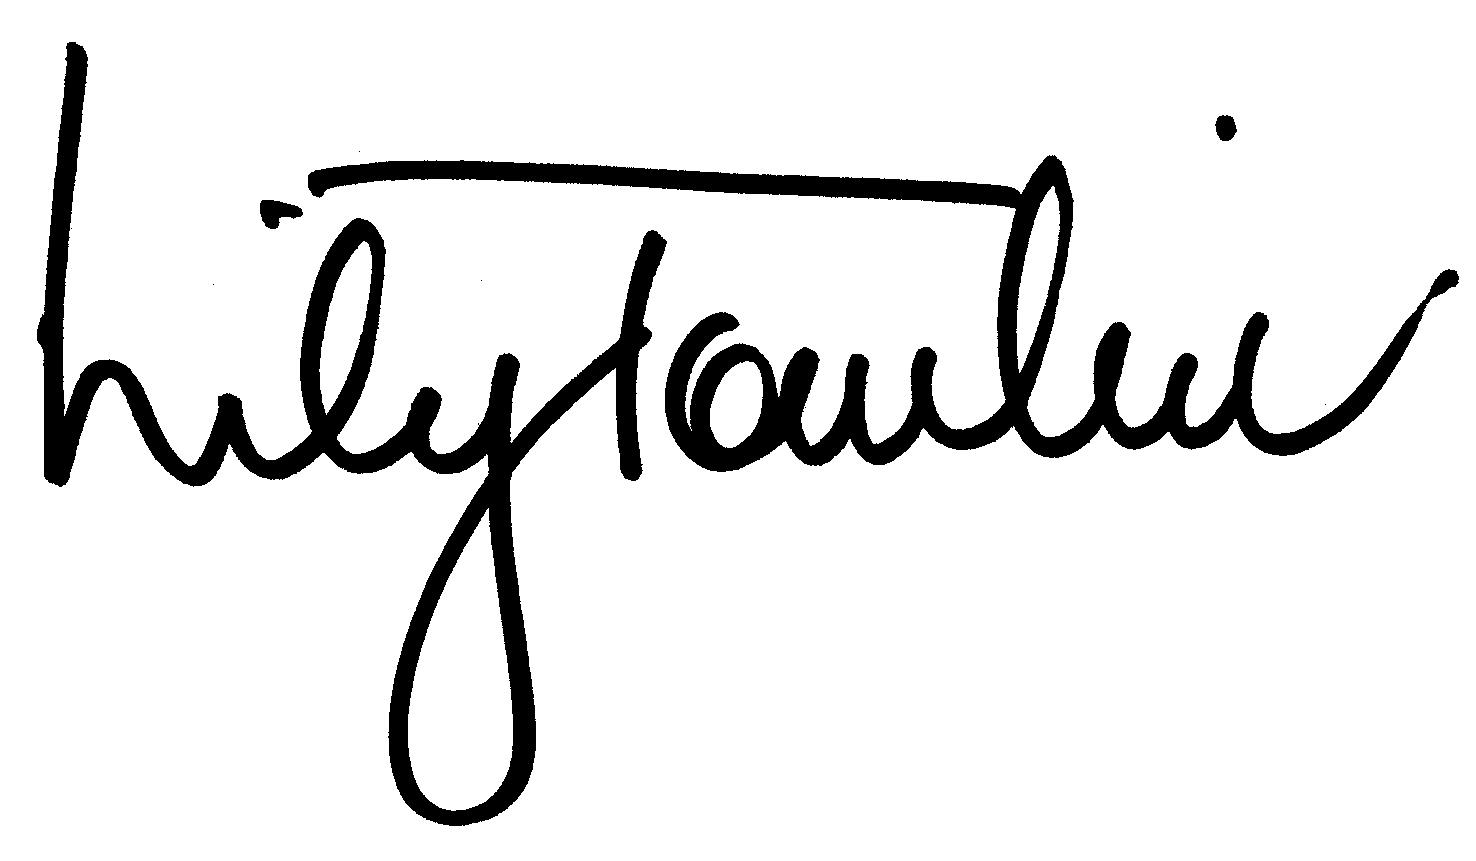 Lily Tomlin autograph facsimile